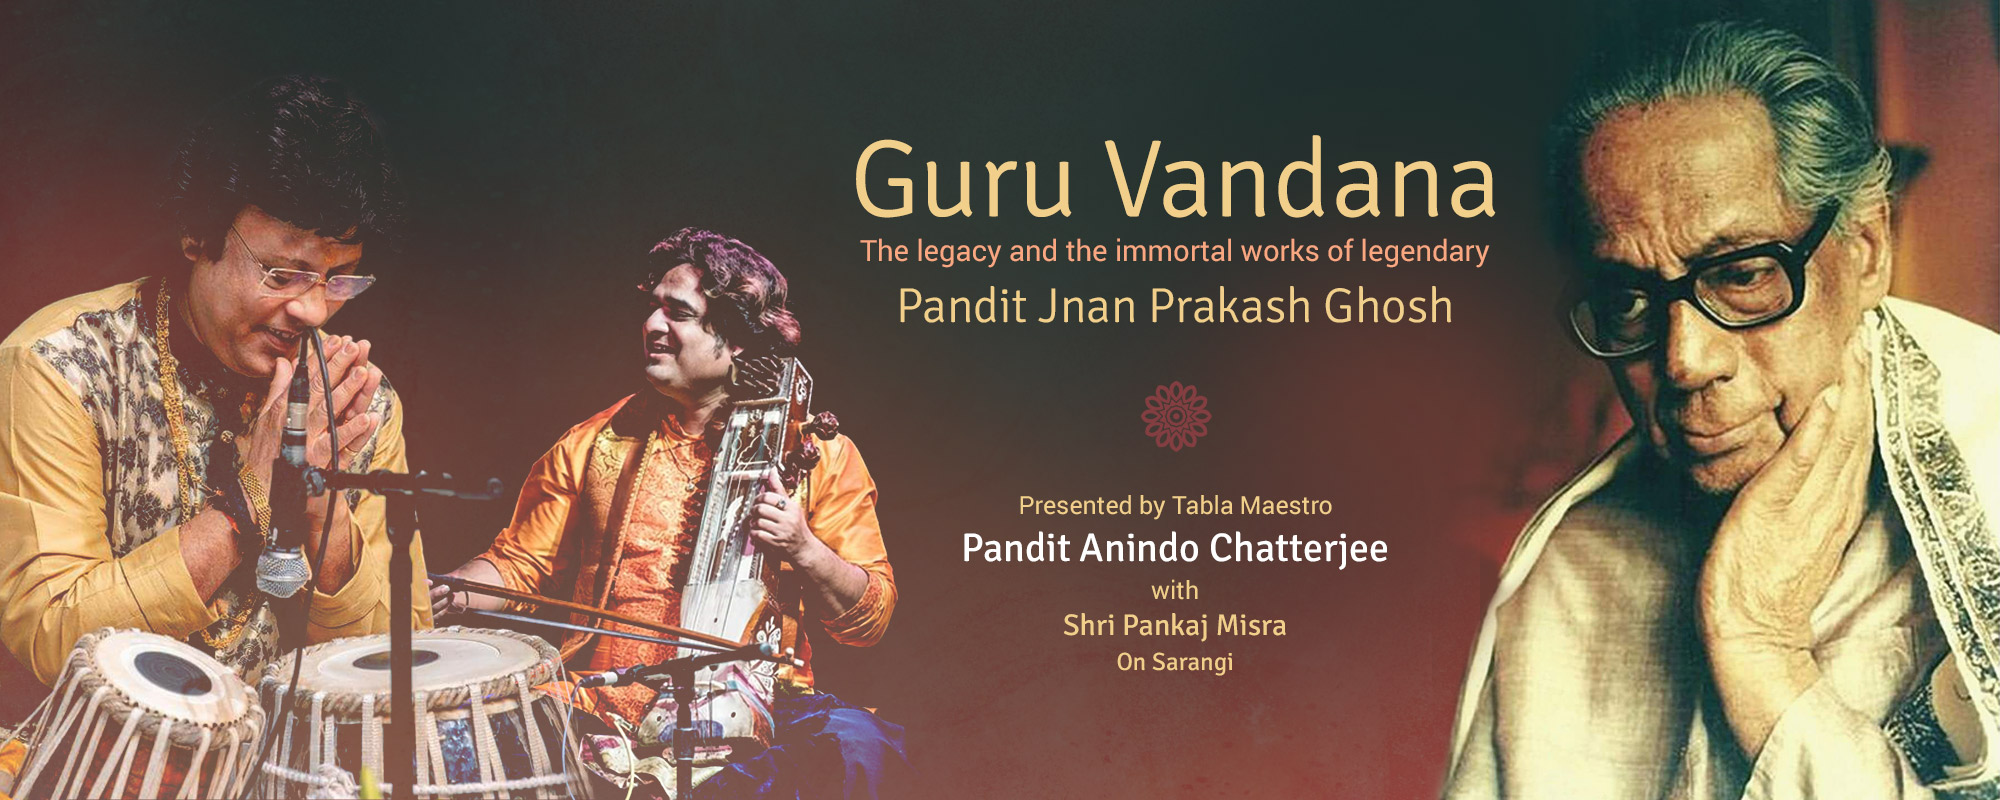 Guru Vandana Concert SangeetSabha